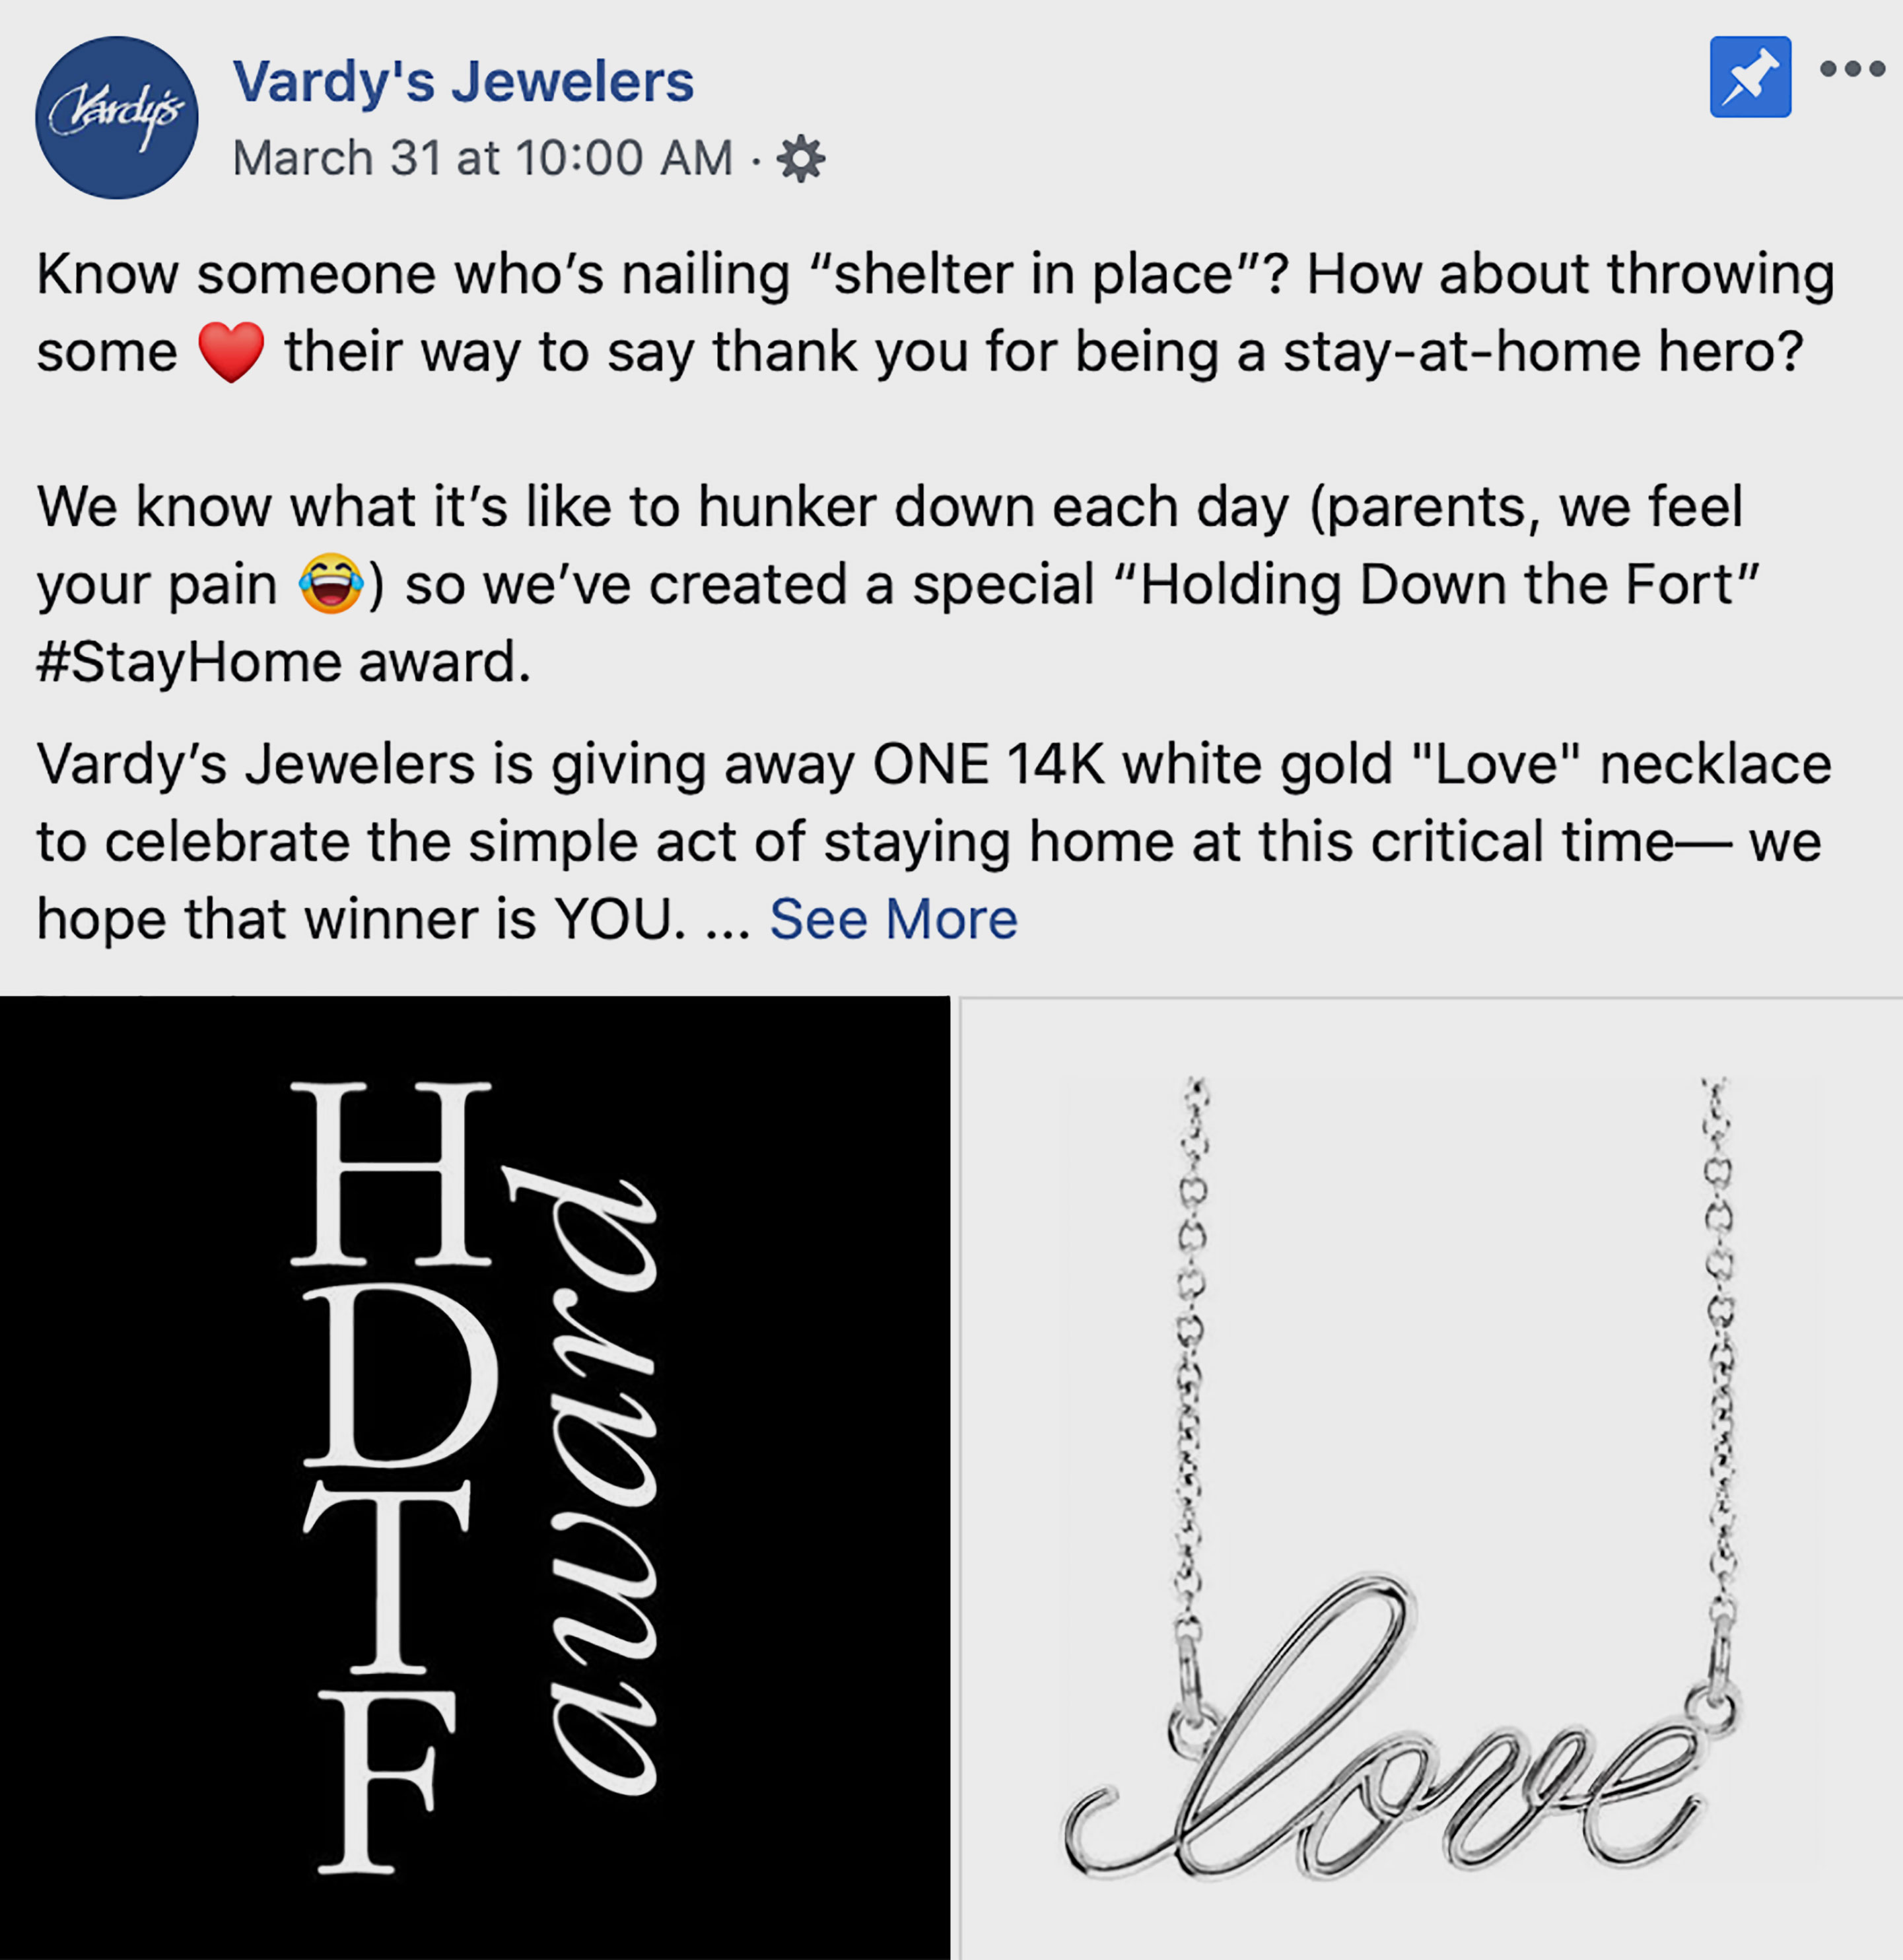 Vardy’s Jewelers #StayHome award